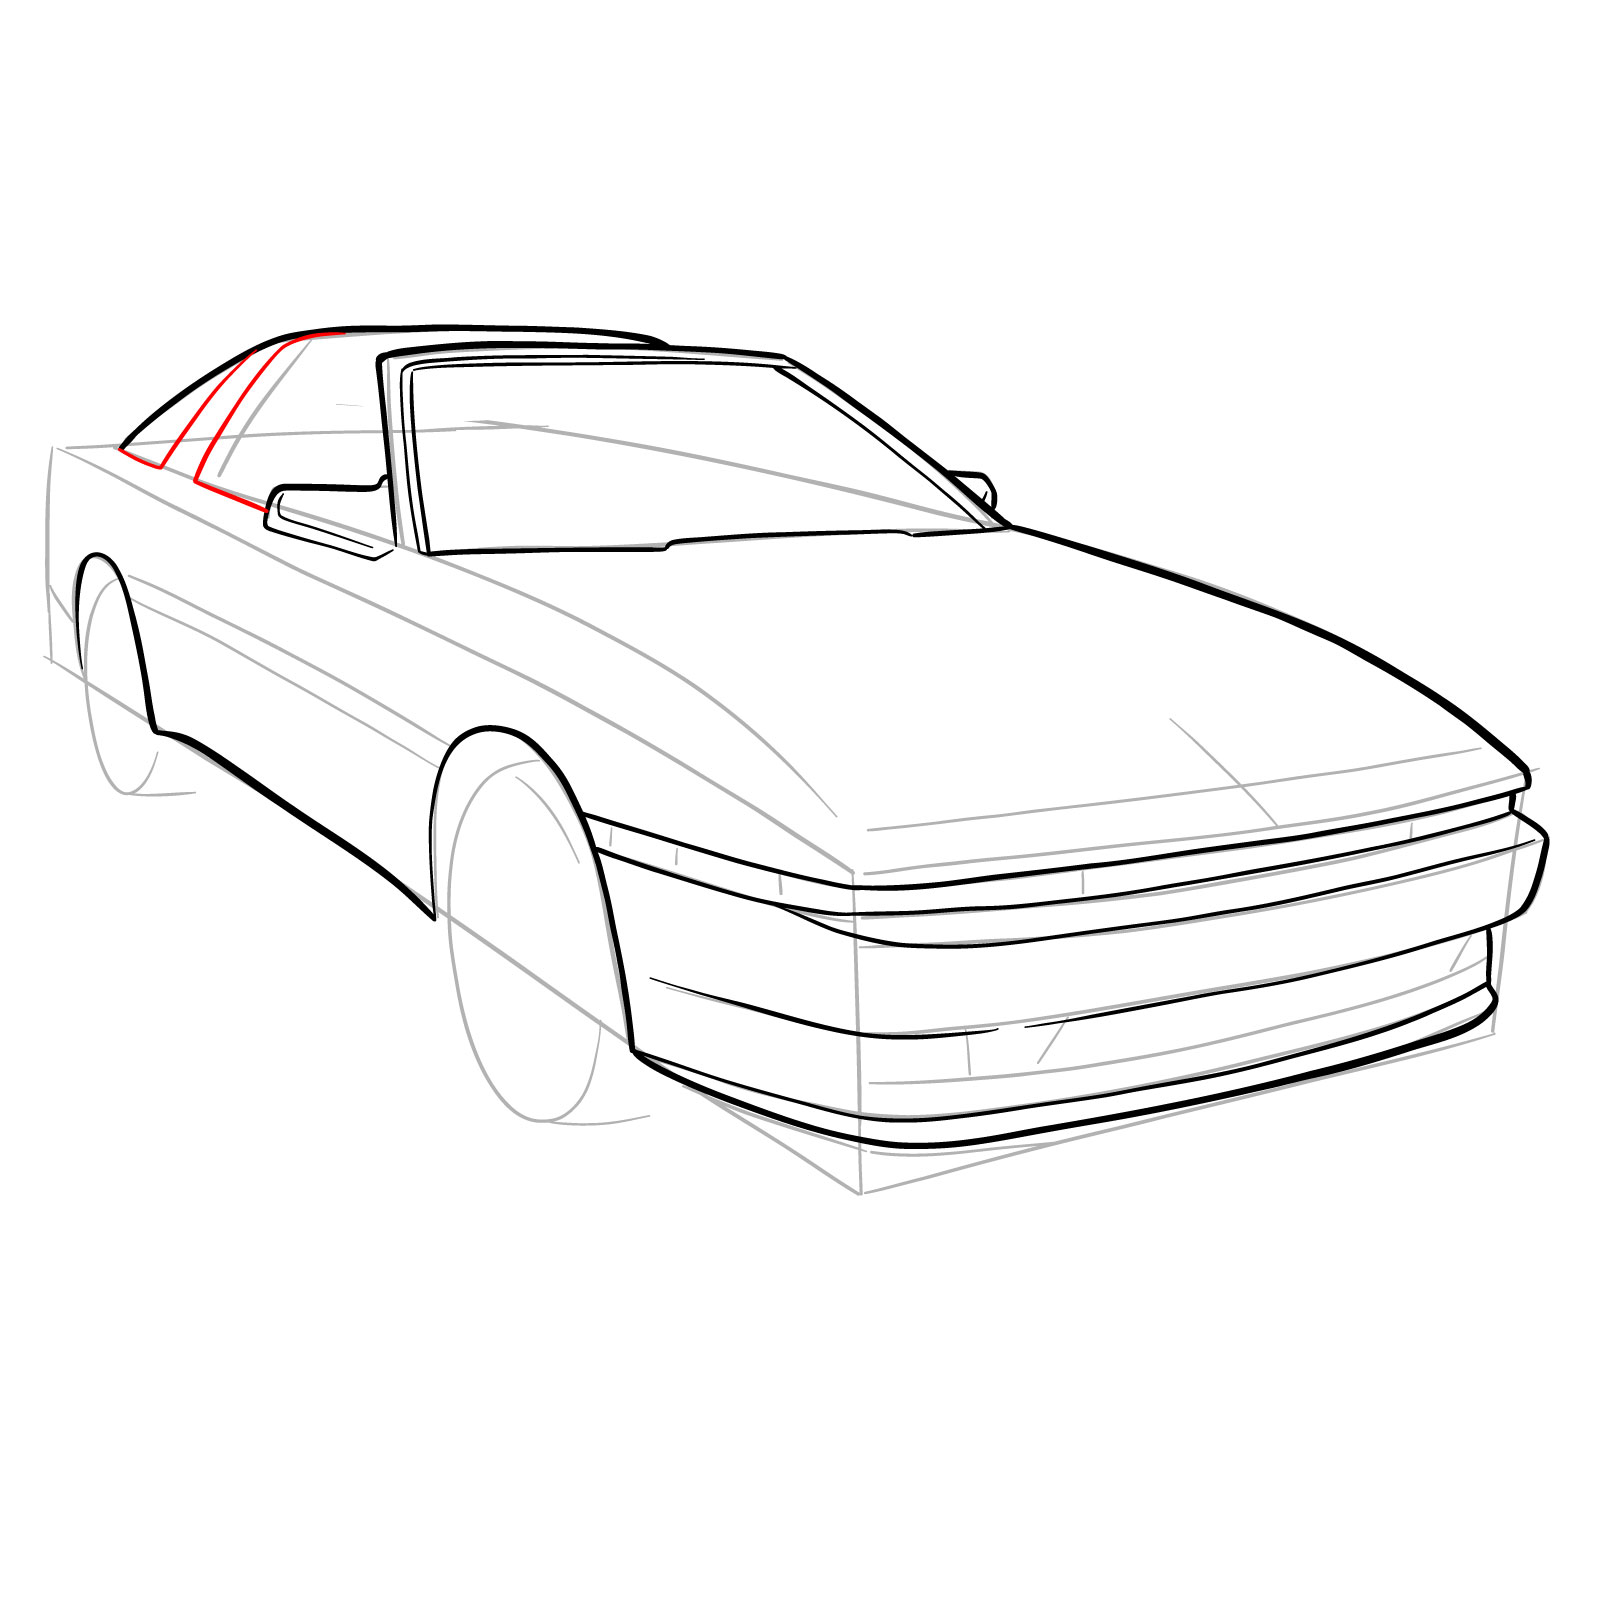 How to draw a 1988 Toyota Supra Turbo MK 3 - step 14